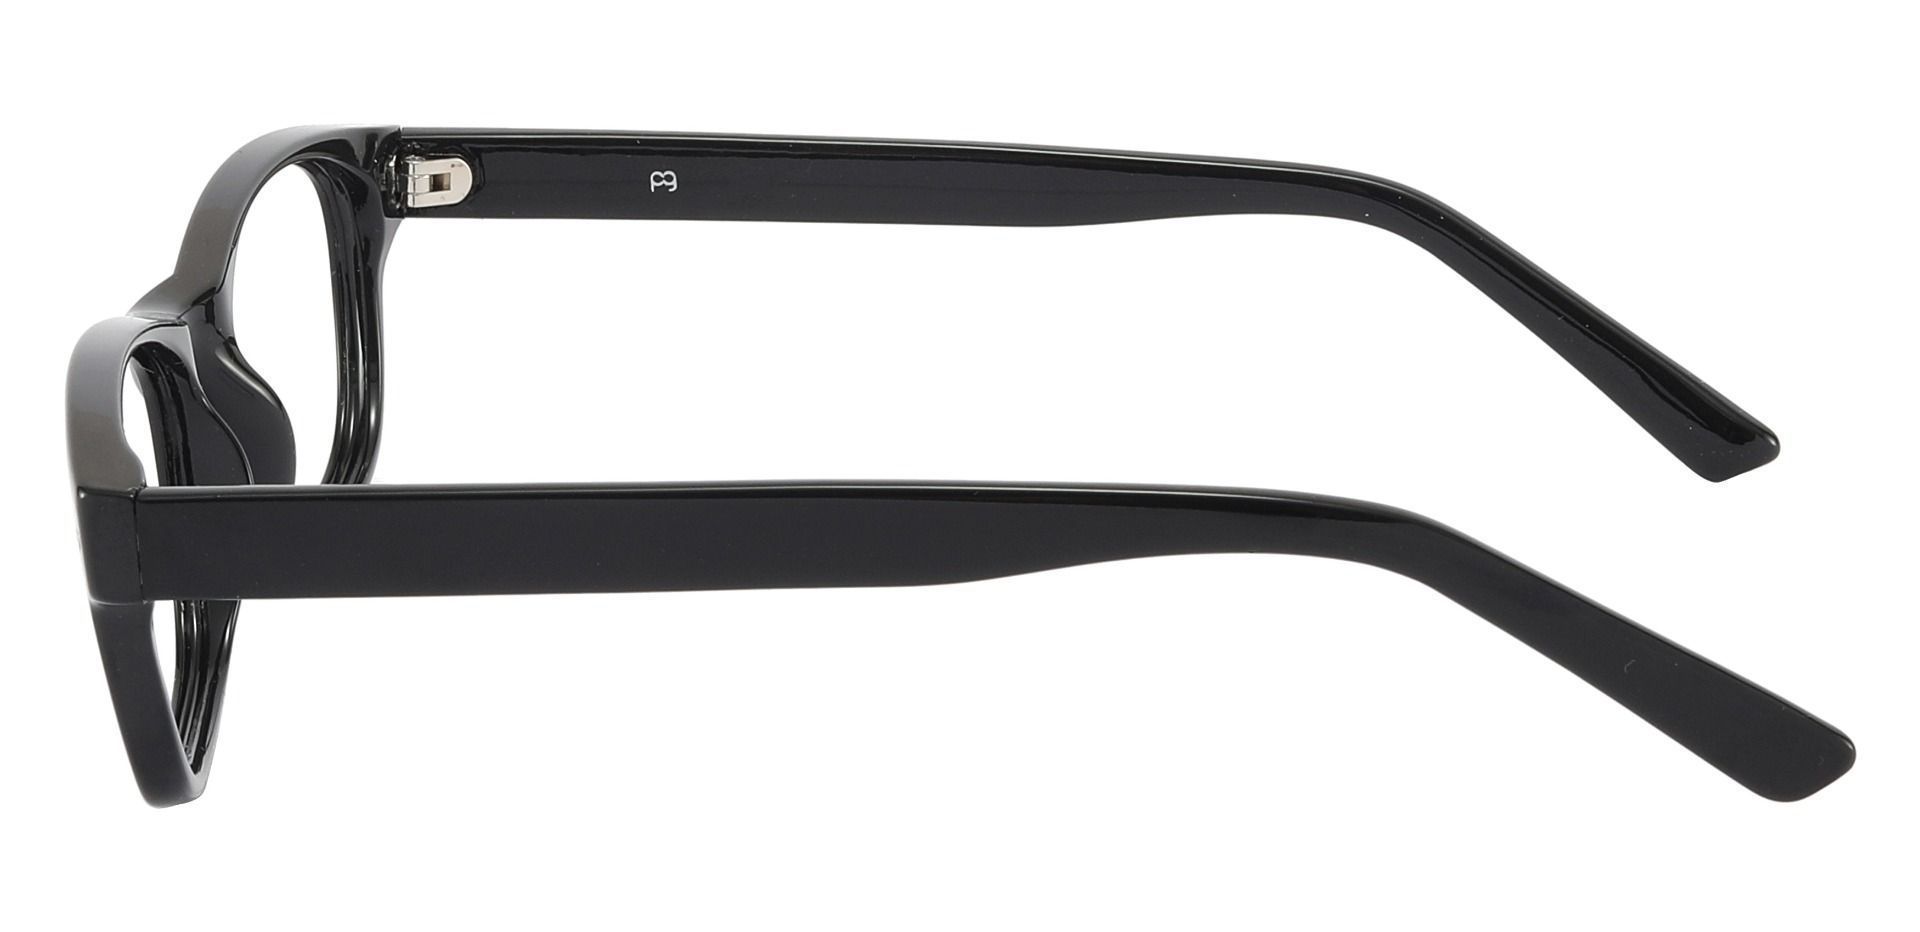 Shaw Oval Eyeglasses Frame - Black